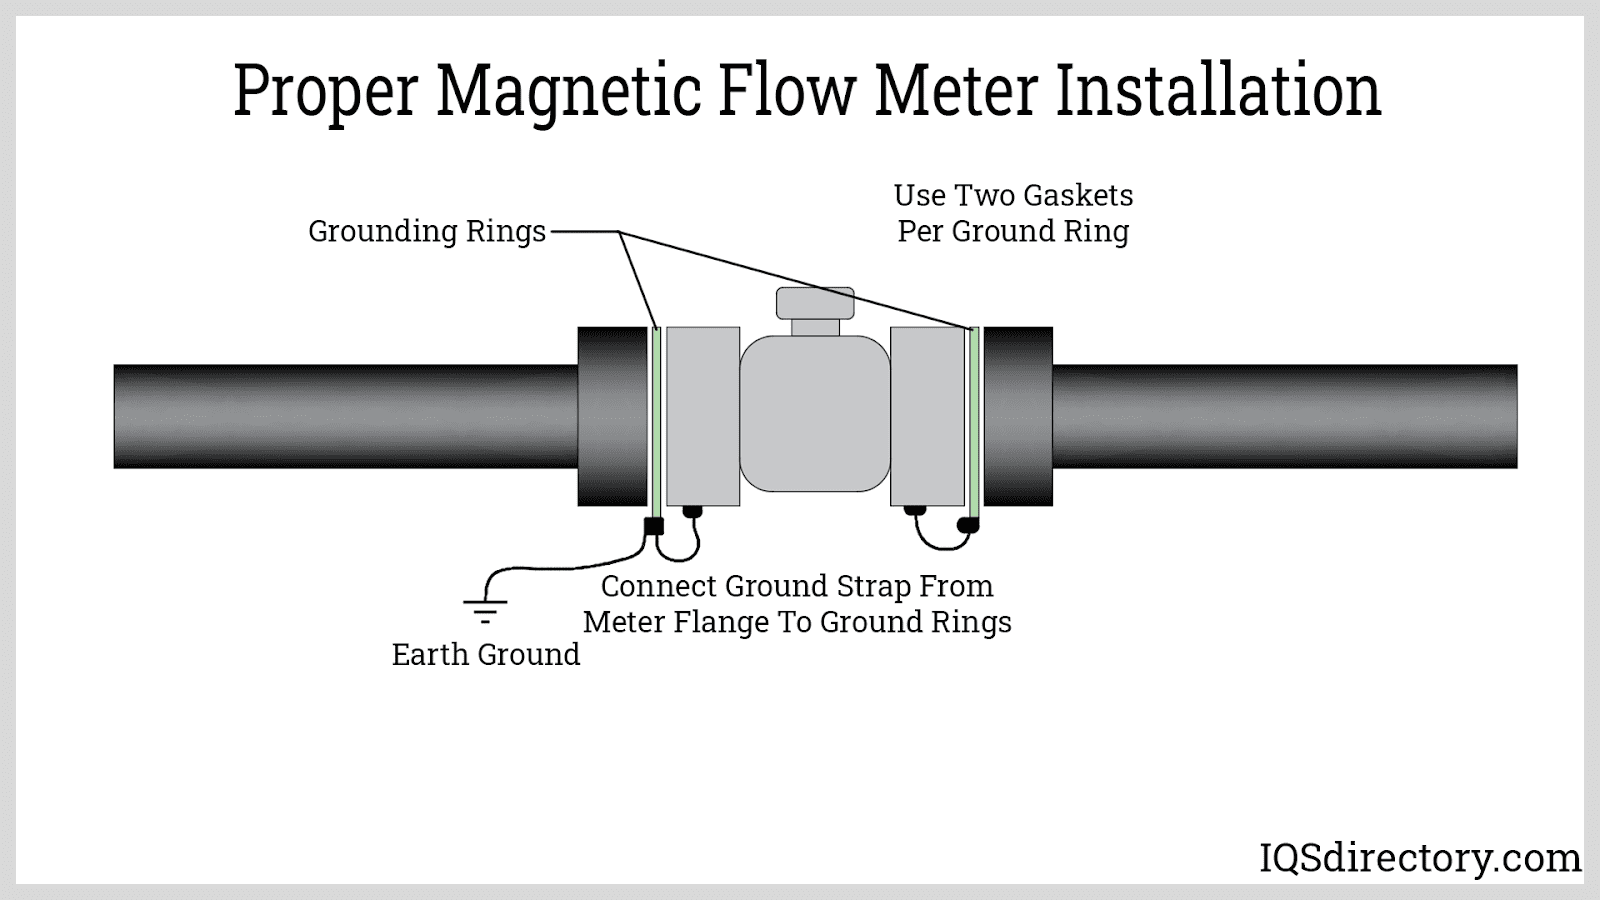 Proper Magnetic Flow Meter Installation